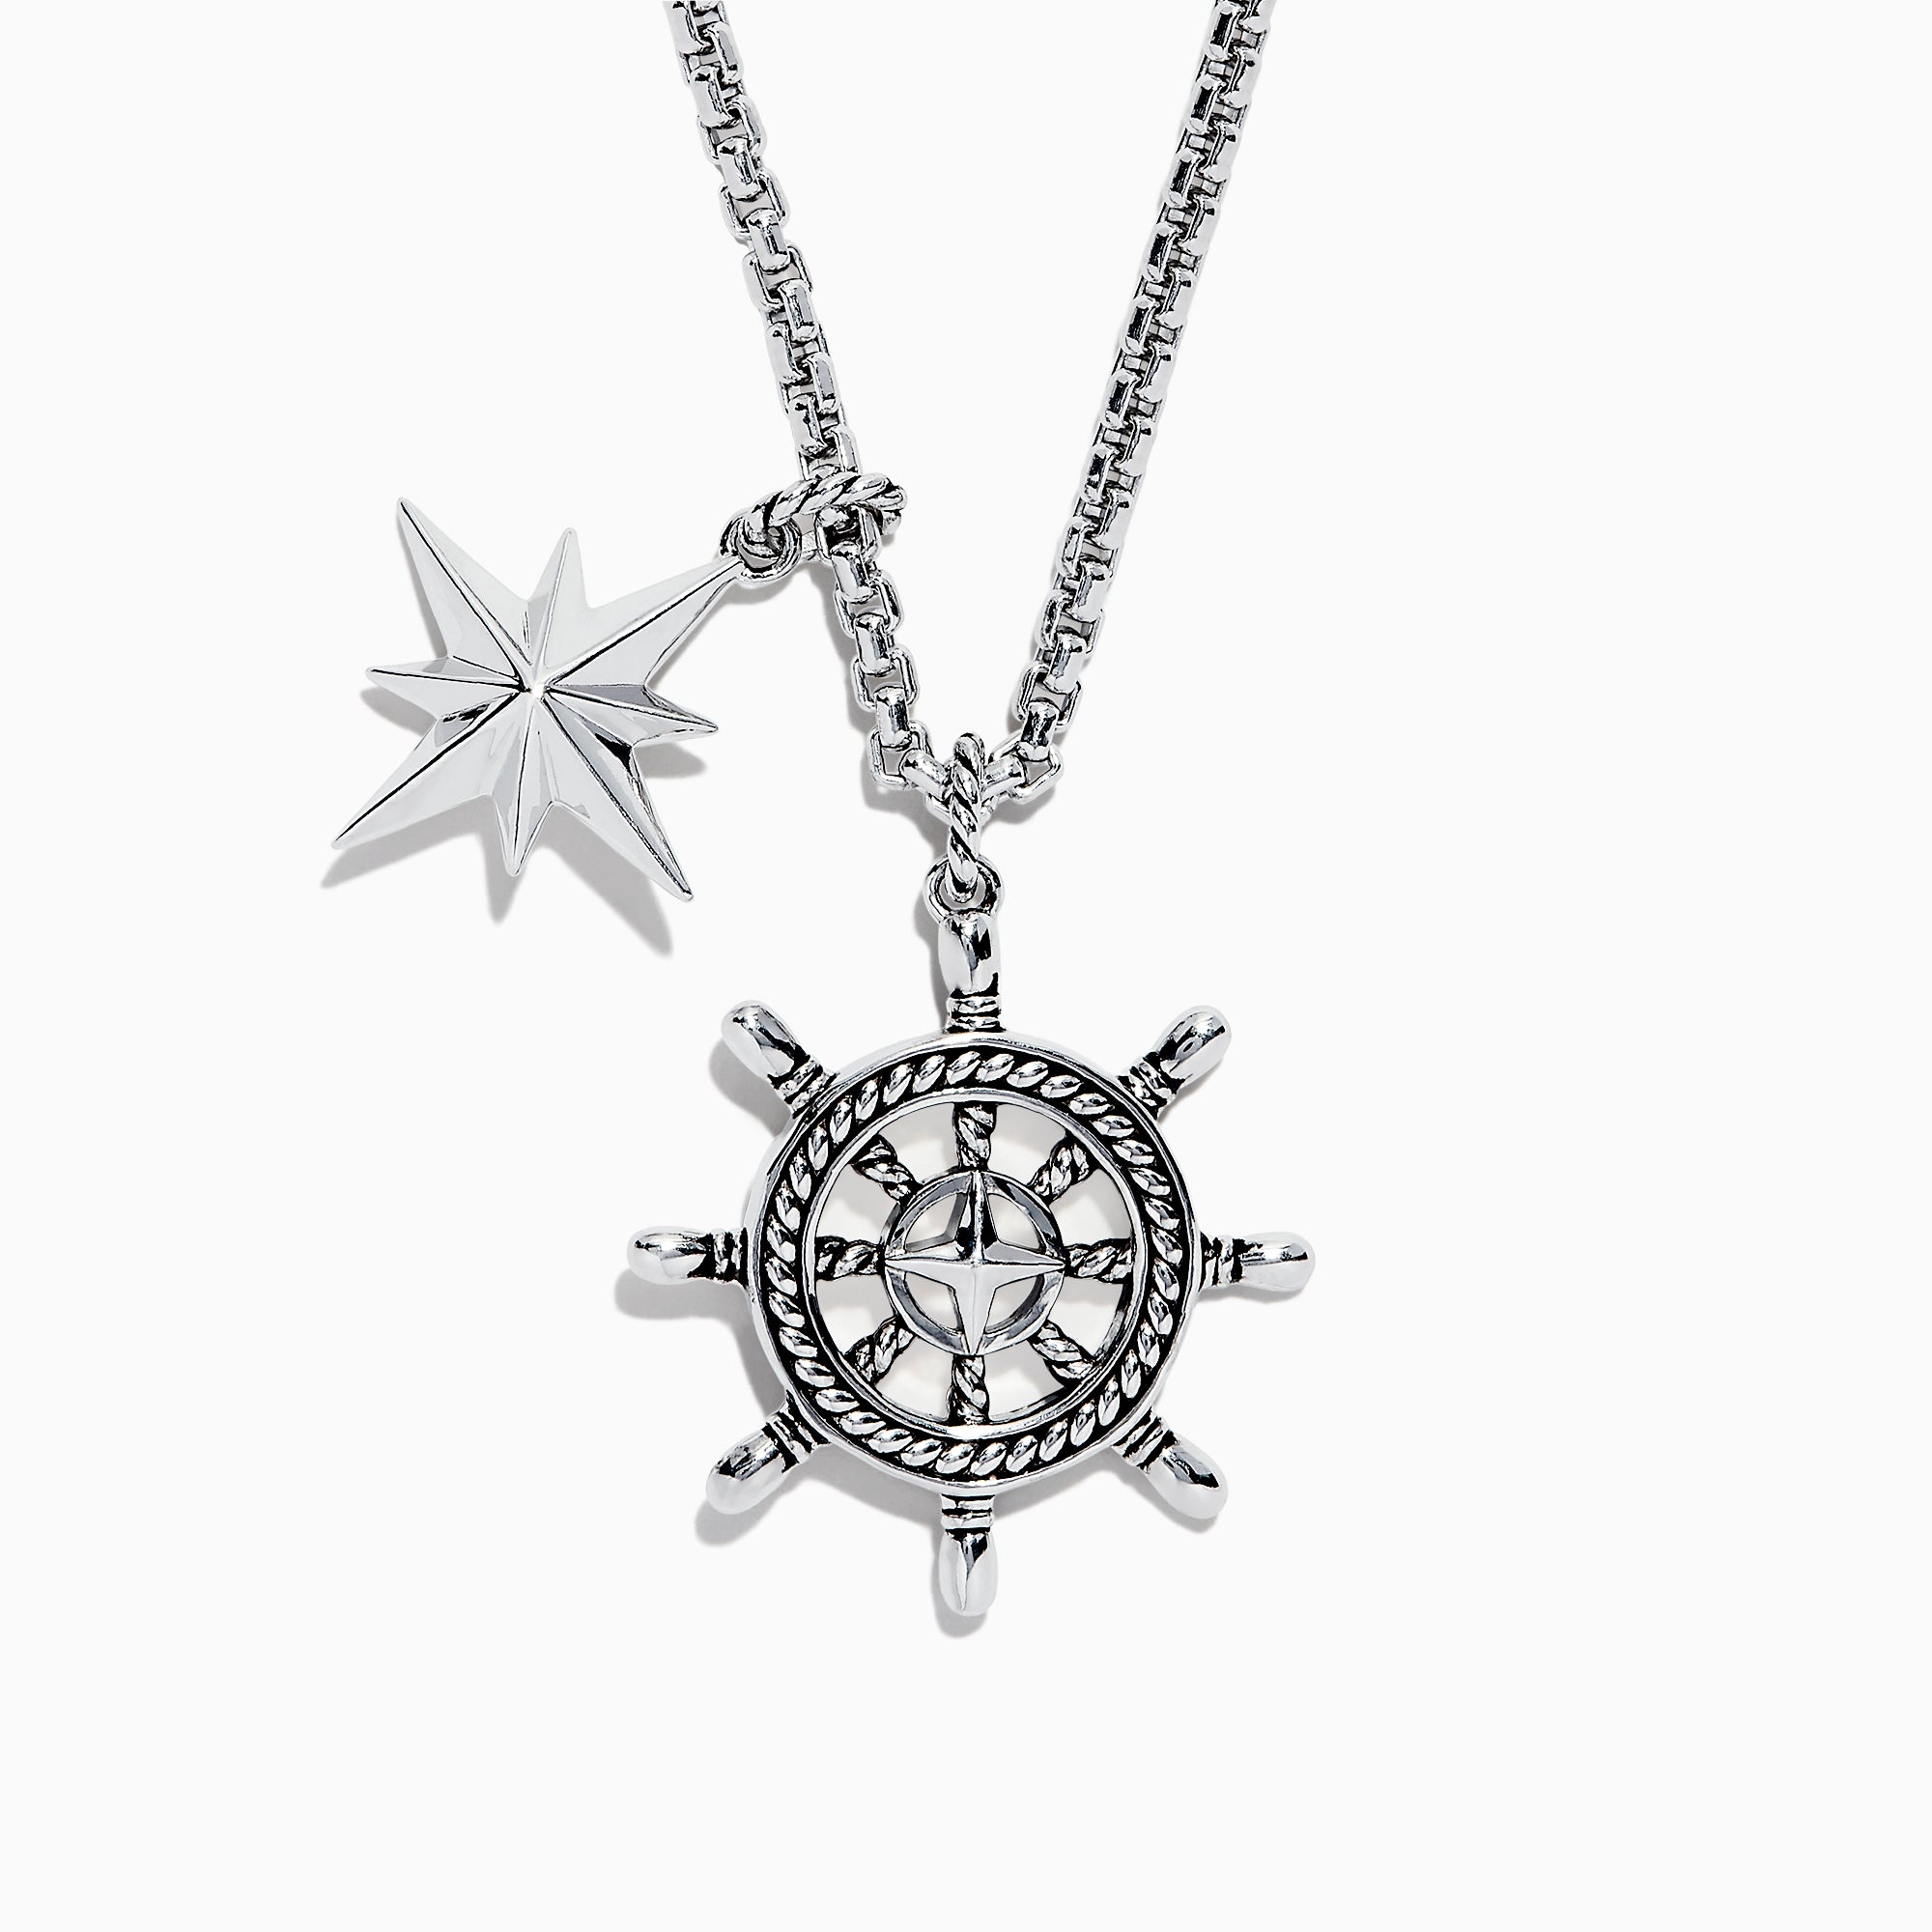 Effy Men's Sterling Silver Ship's Wheel and Star Pendant